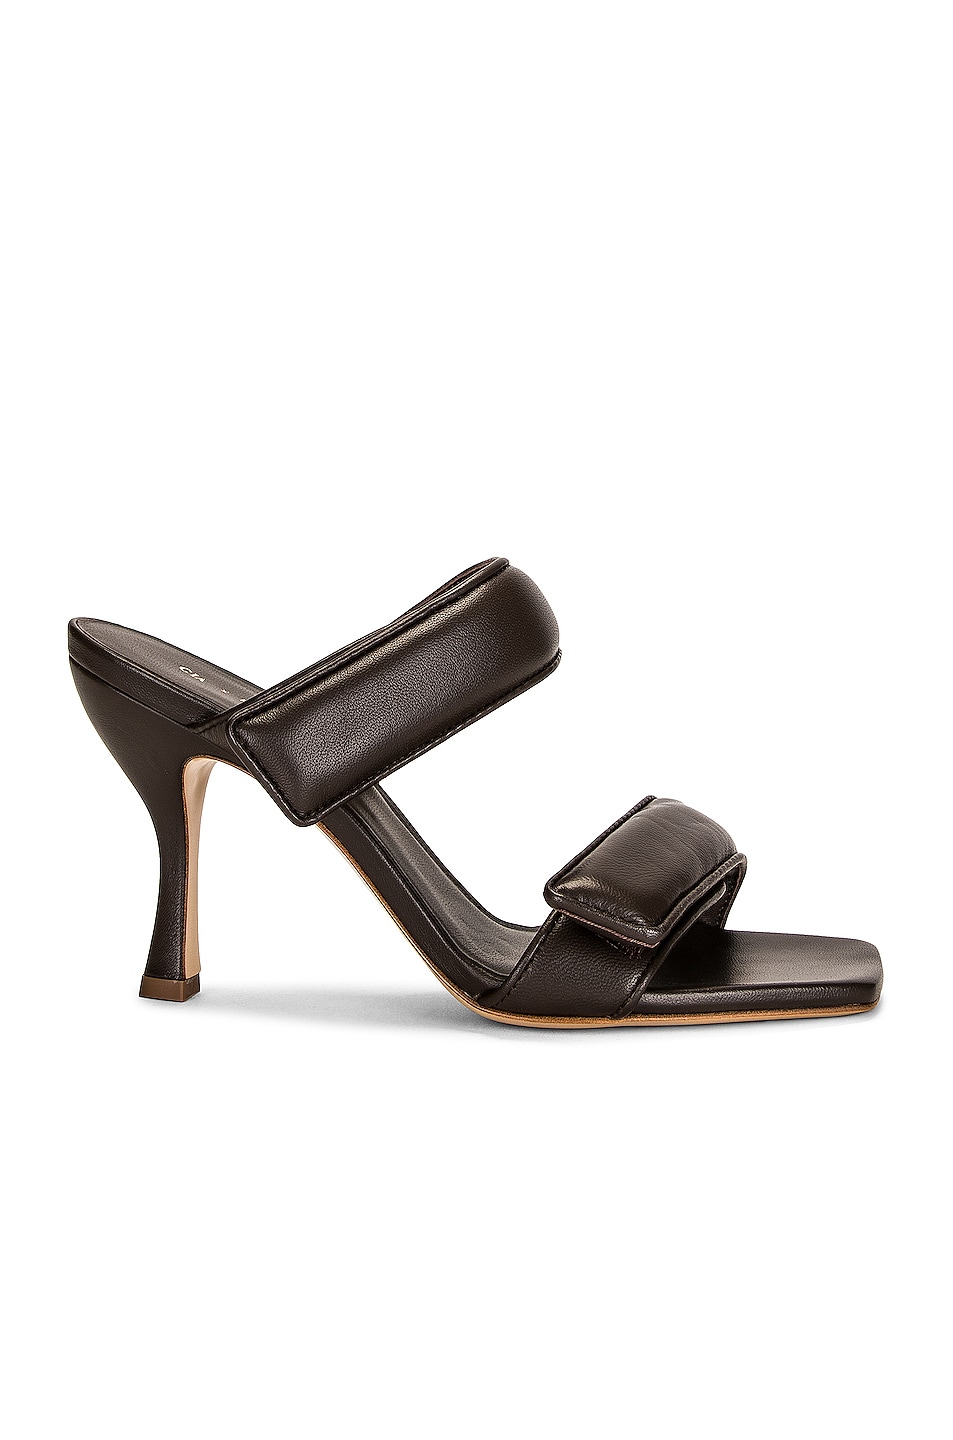 Image 1 of GIA BORGHINI x Pernille Teisbaek Two Strap Sandal in Dark Brown